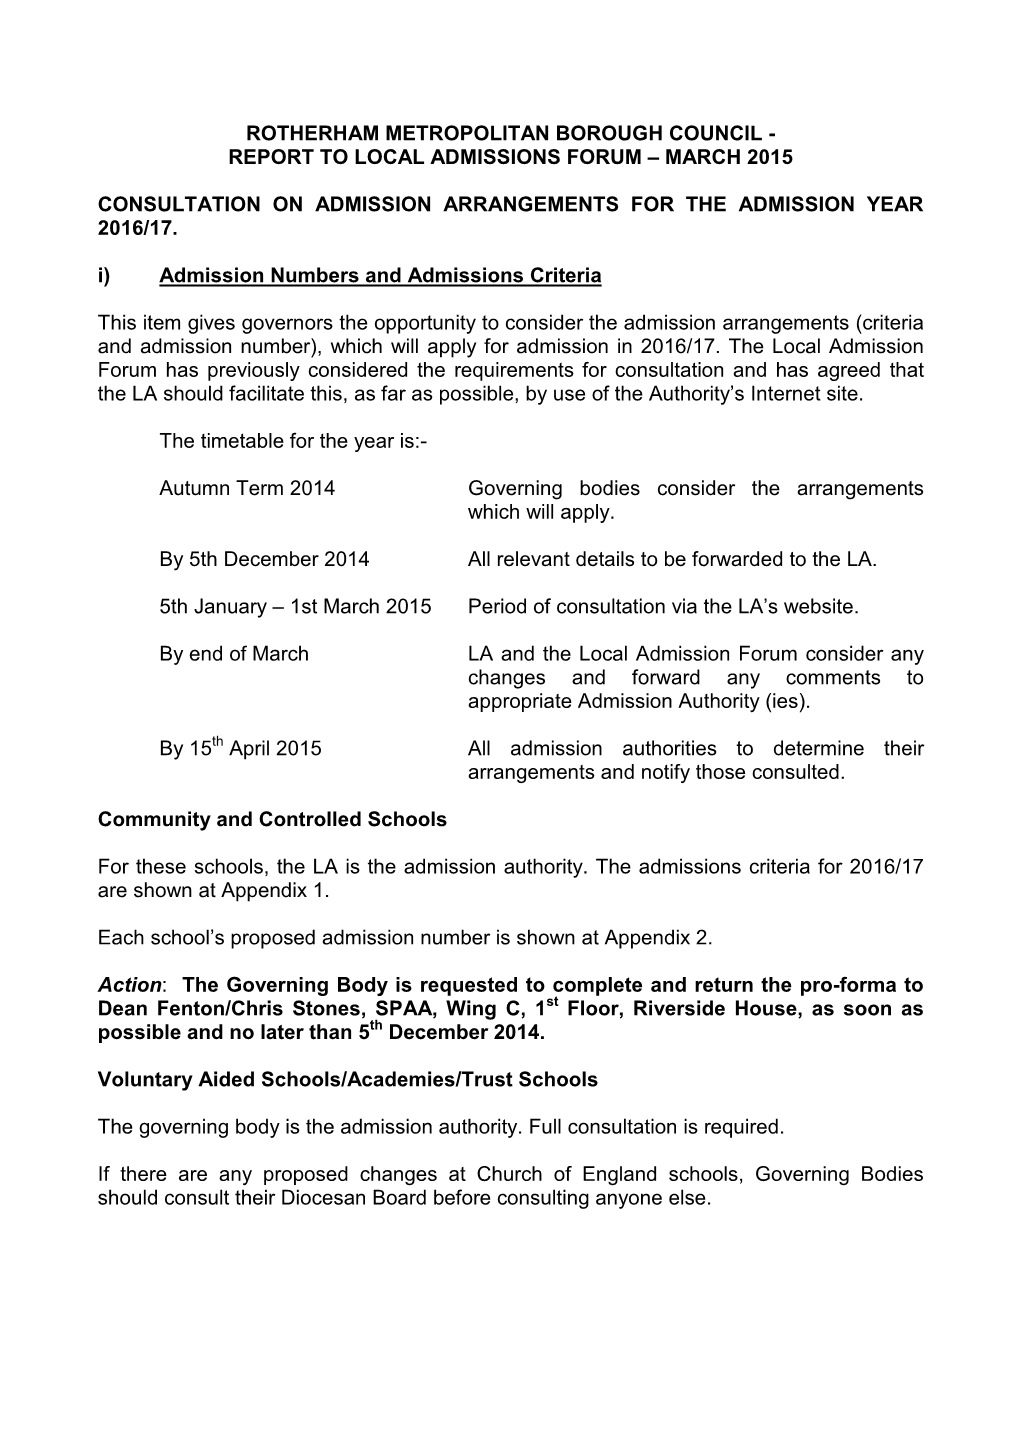 March 2015 Consultation on Admission Arrangements